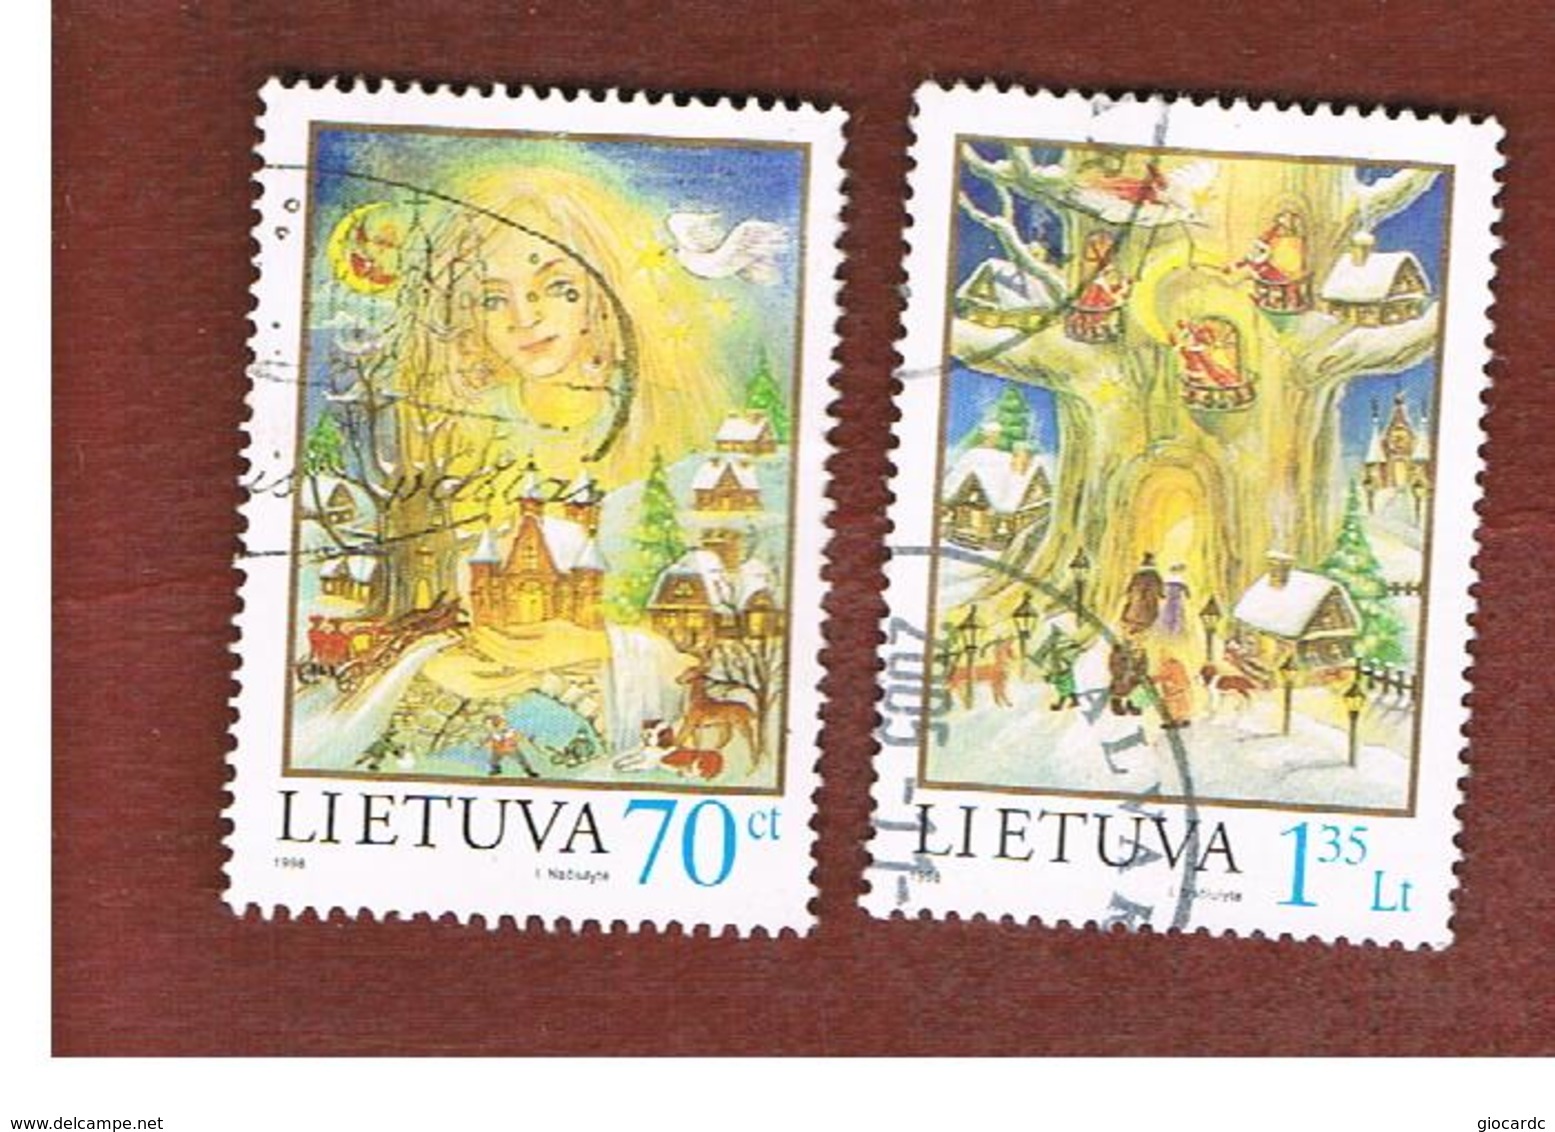 LITUANIA (LITHUANIA)   - SG  689.690  -        1998 CHRISTMAS (COMPLET SET OF 2)   -   USED - Lituania